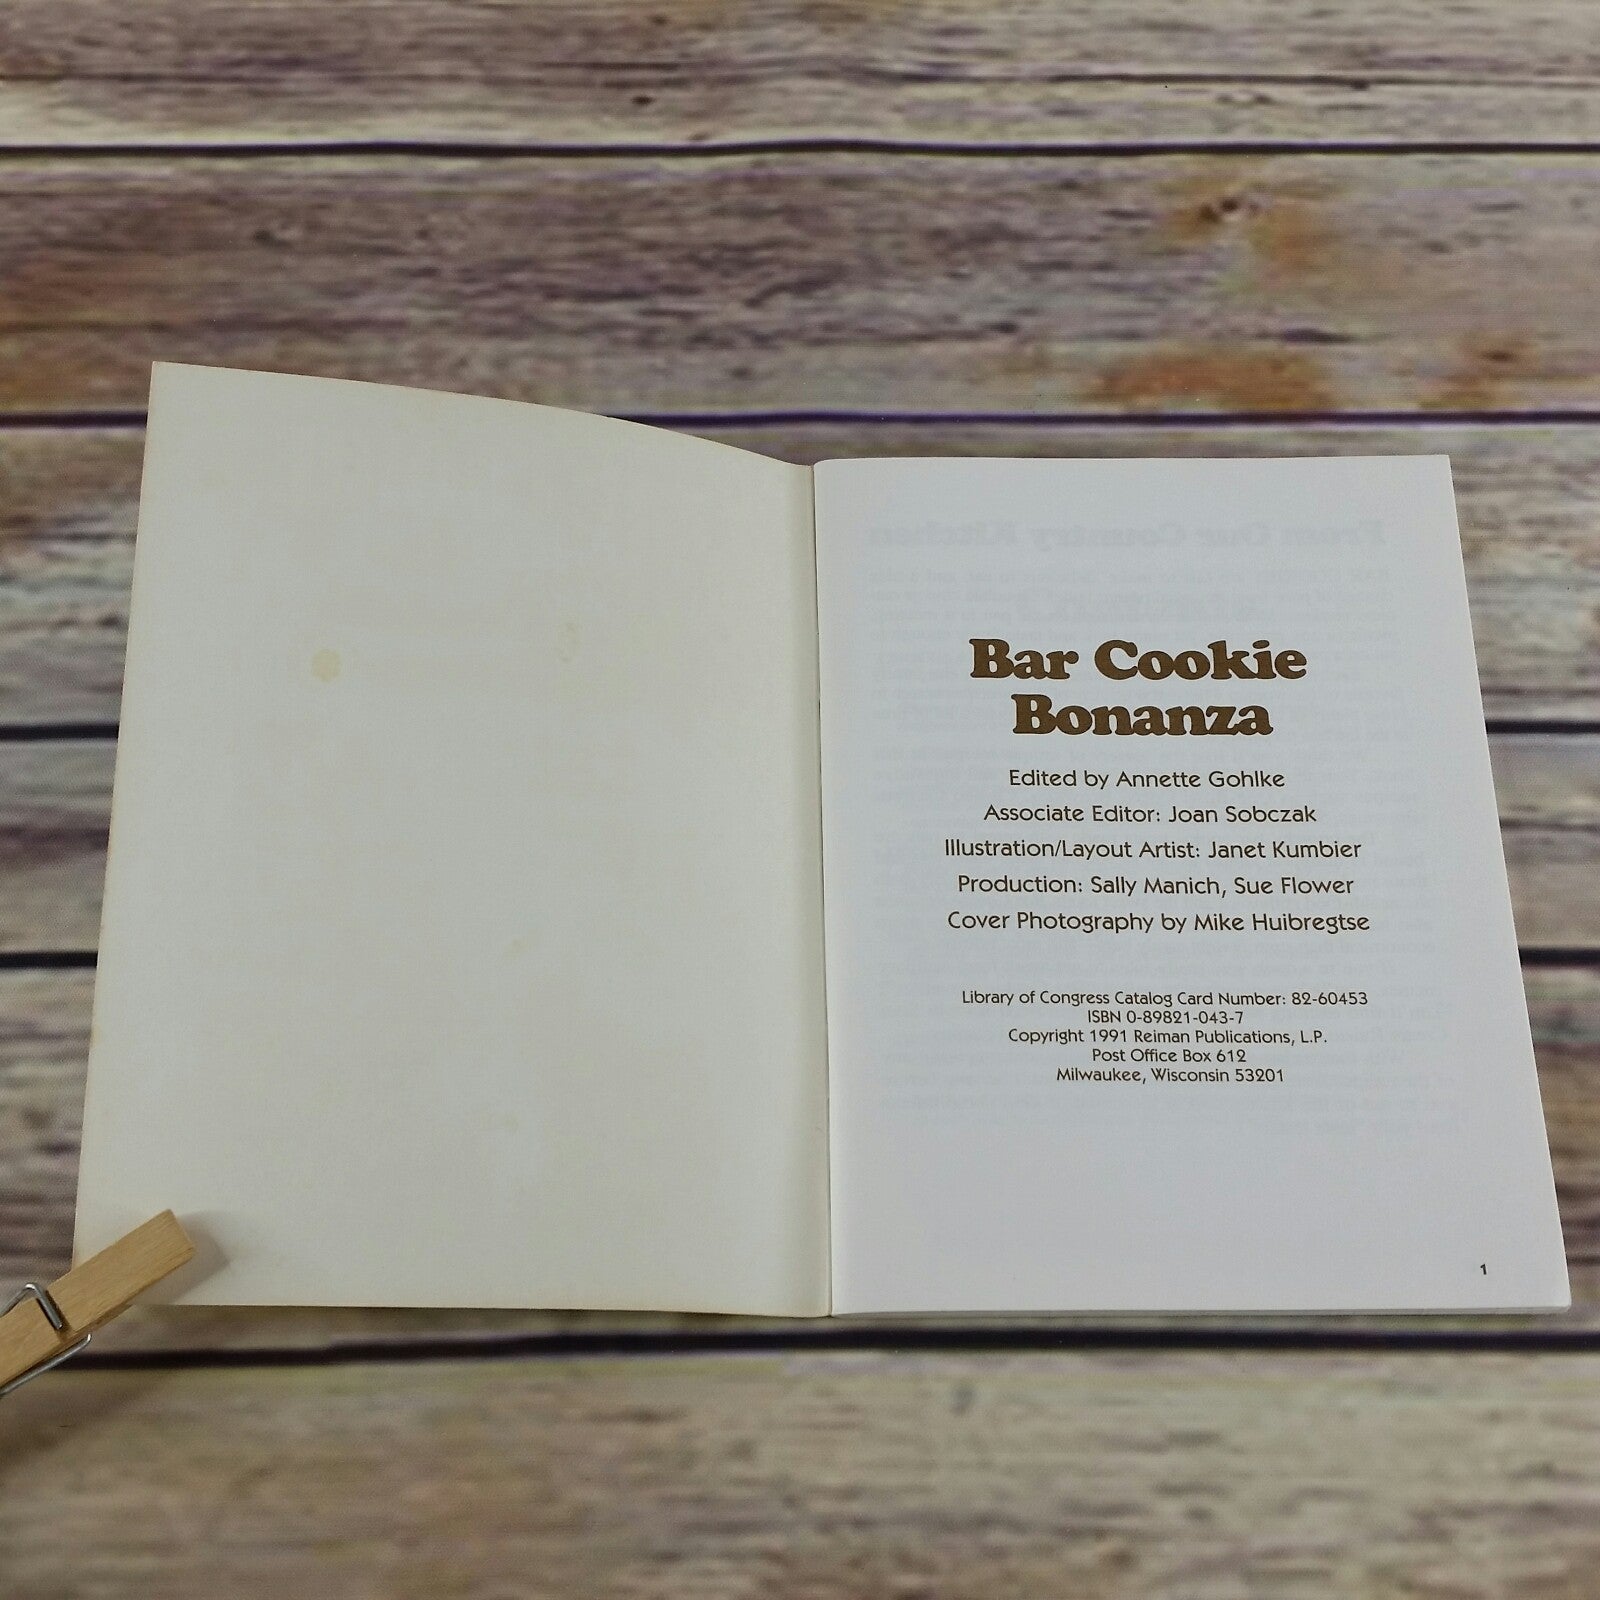 Vintage Cookies Cookbook Bar Cookie Bonanza Recipes 1991 Paperback Booklet - At Grandma's Table